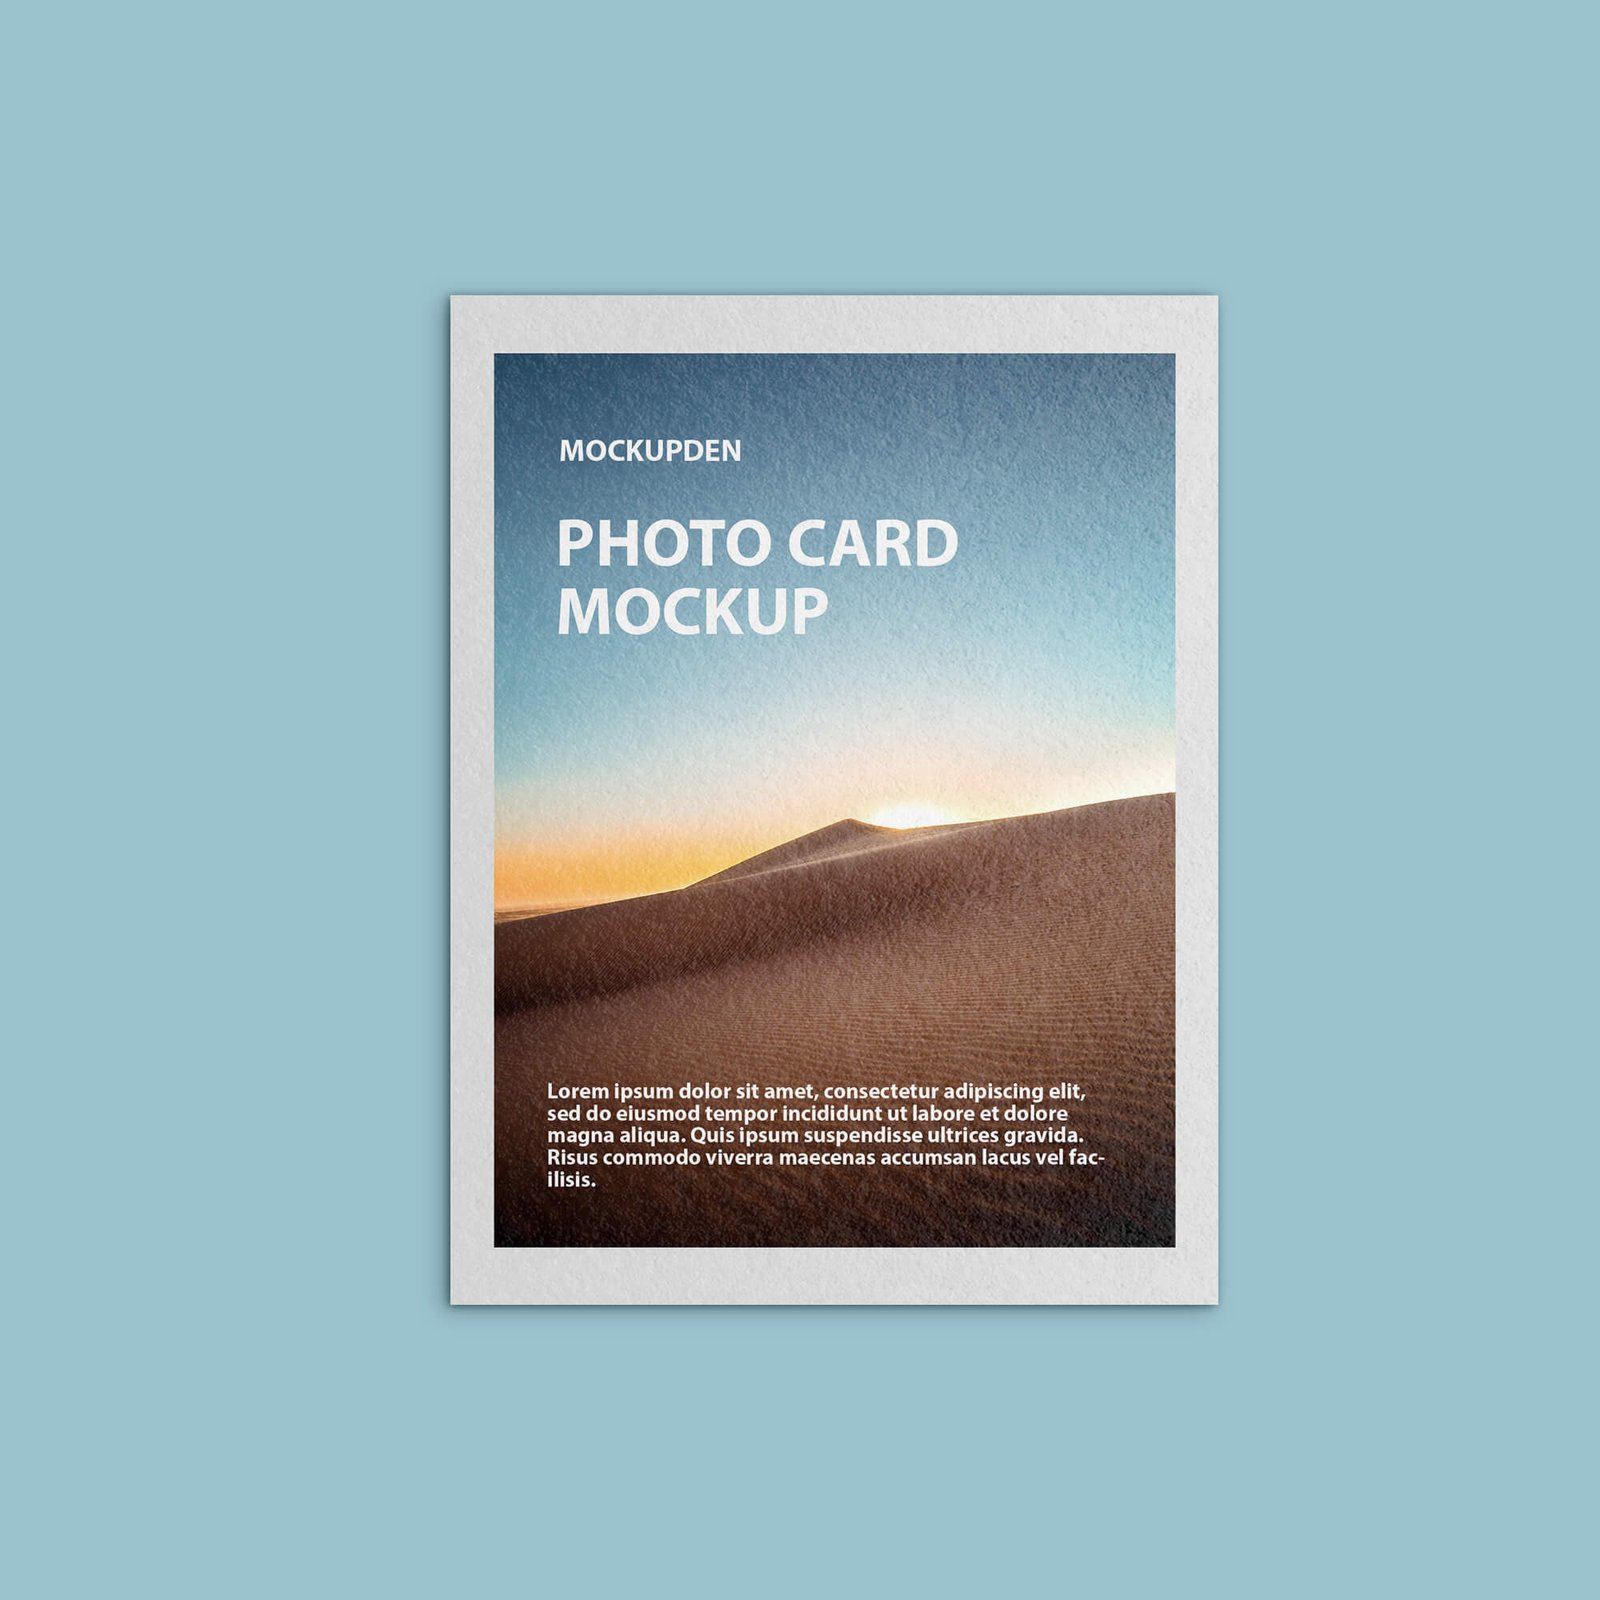 Design Free Photo Card Mockup PSD Template